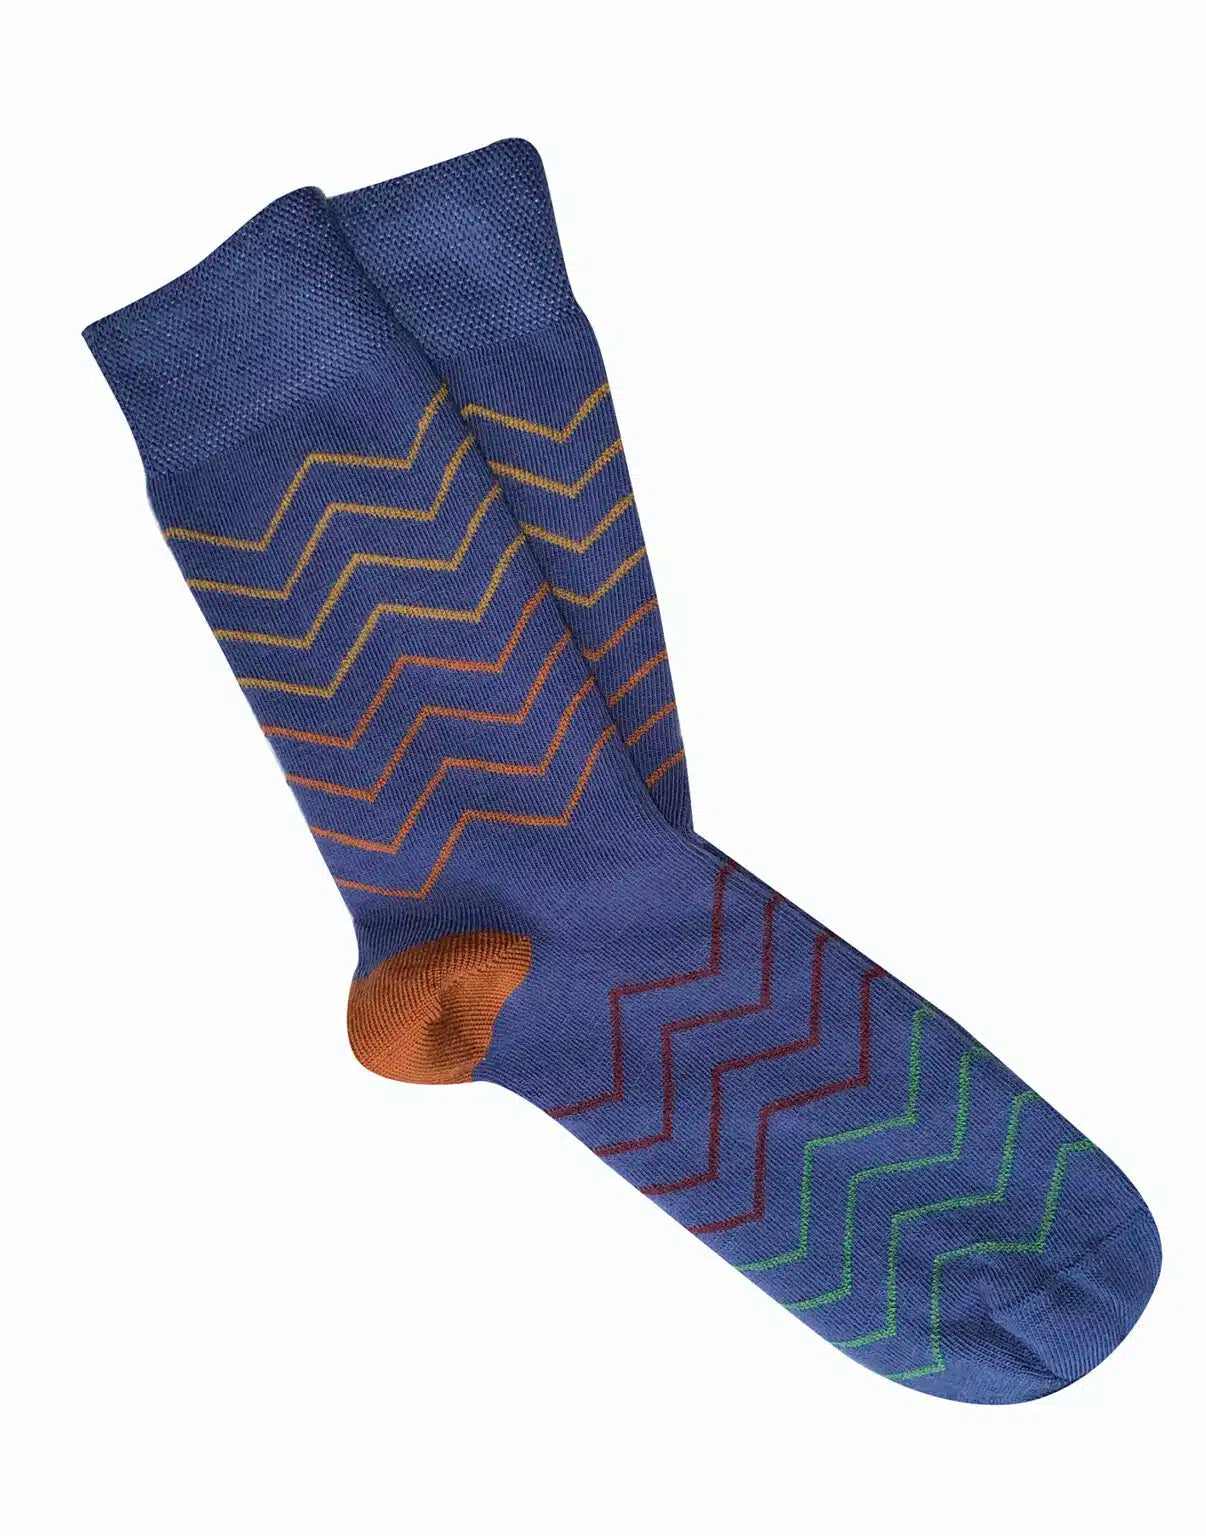 'Waves' Merino Socks - Tightology socks Tightology Blue 